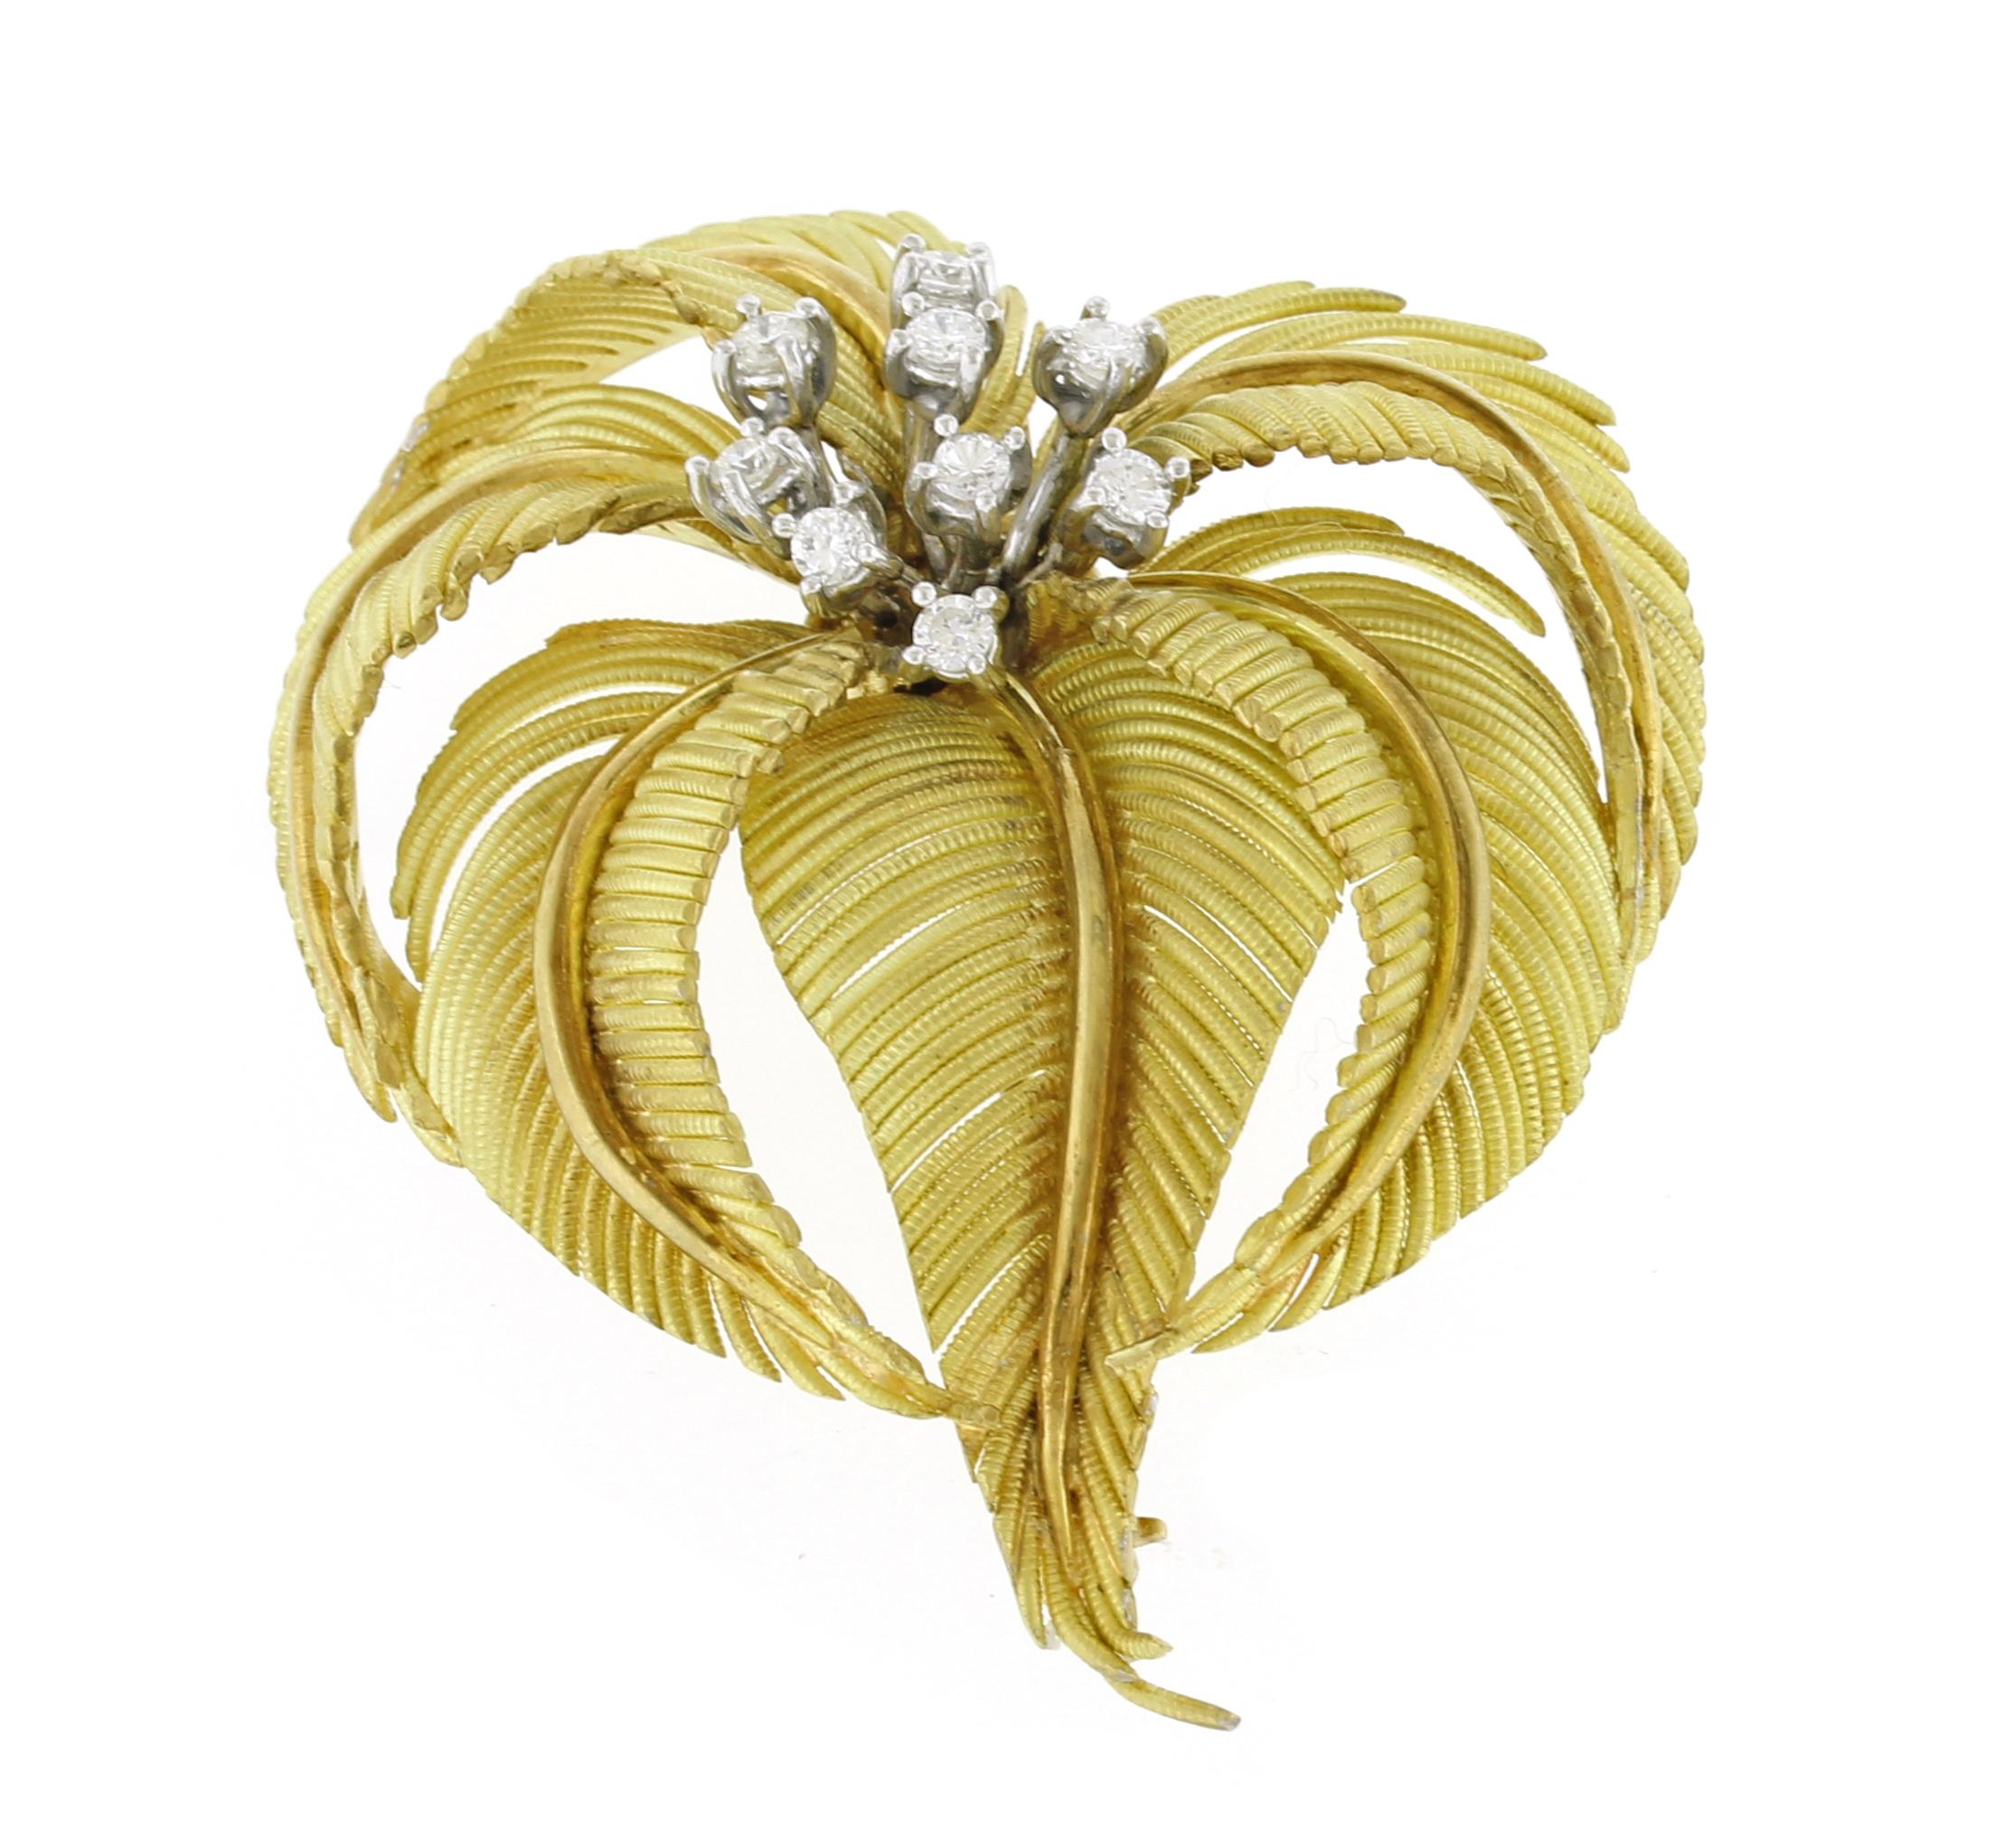 Taille brillant Tiffany & Co. Broche palmier en or 18 carats et diamants en vente